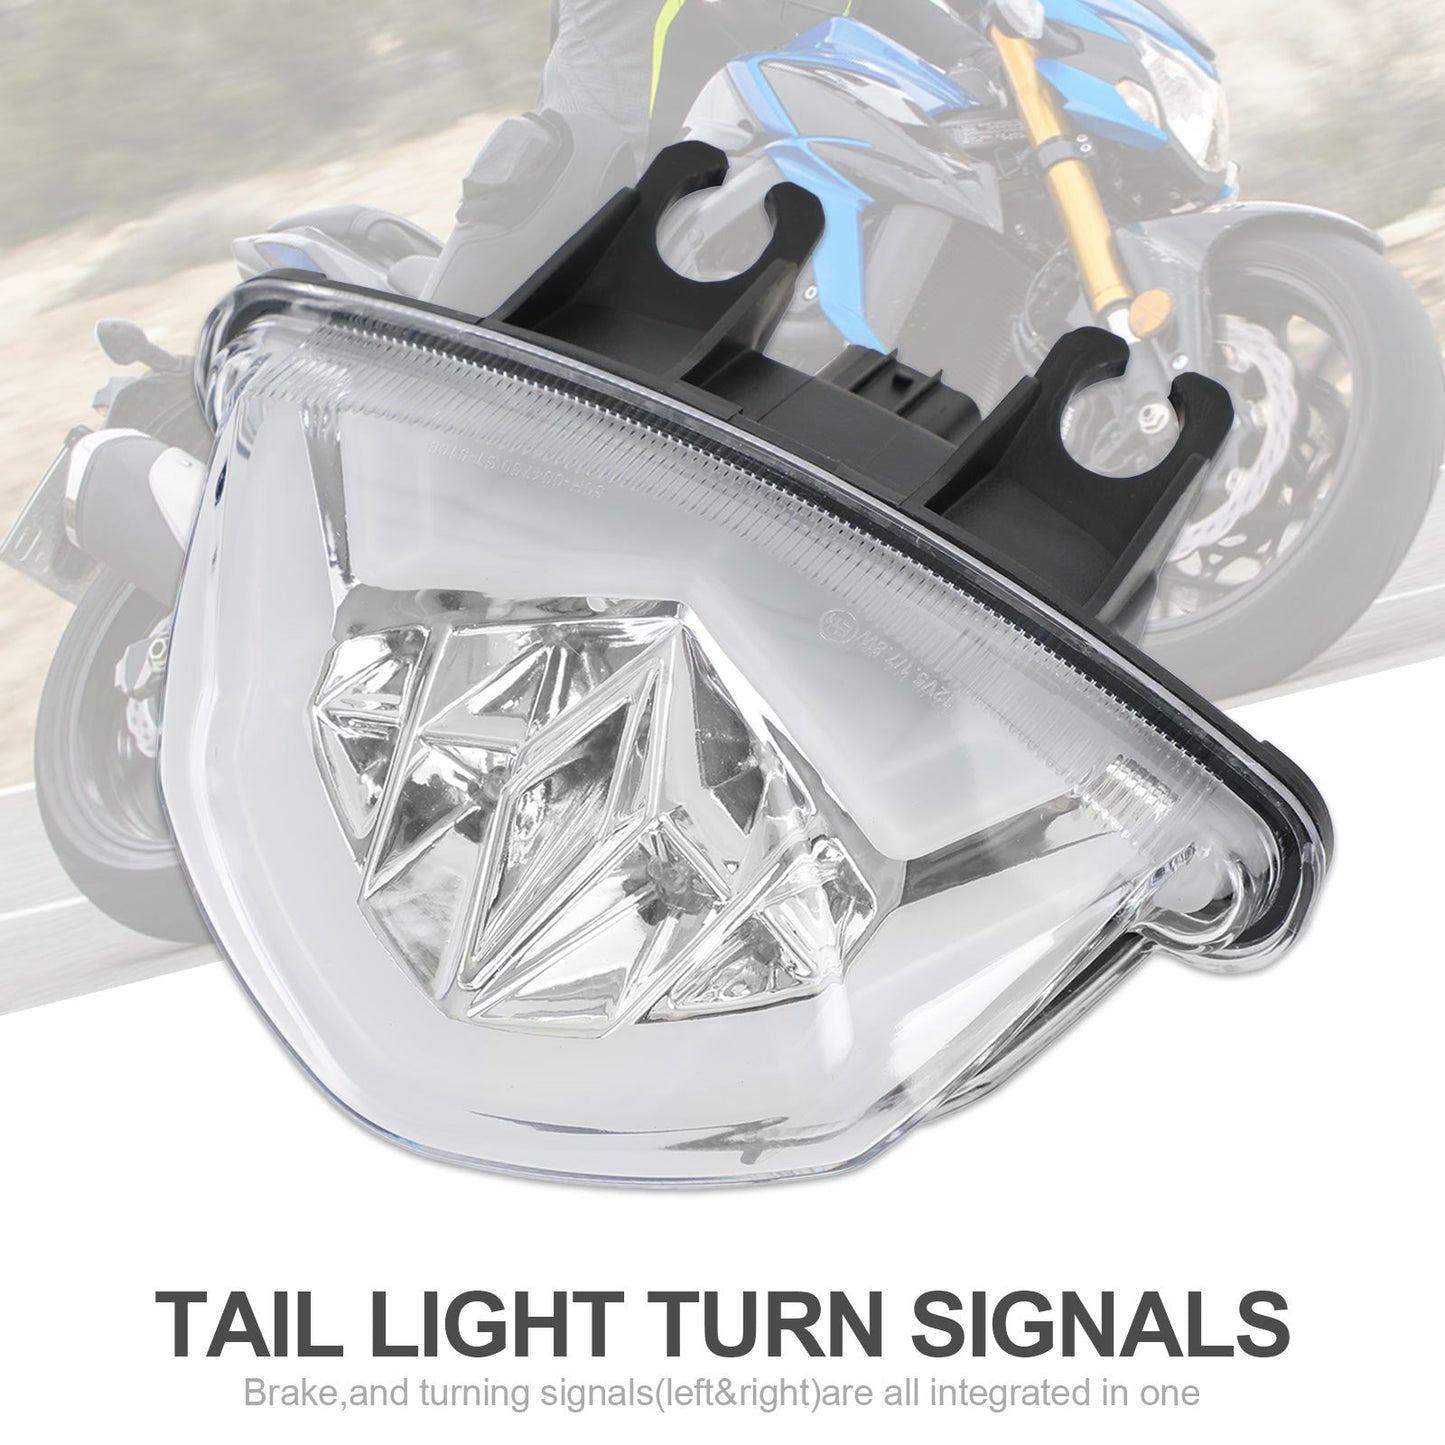 LED Tail Light Turn Signal For Suzuki GSXS 1000 F GSX-S 750 Z 2017-2021 Black